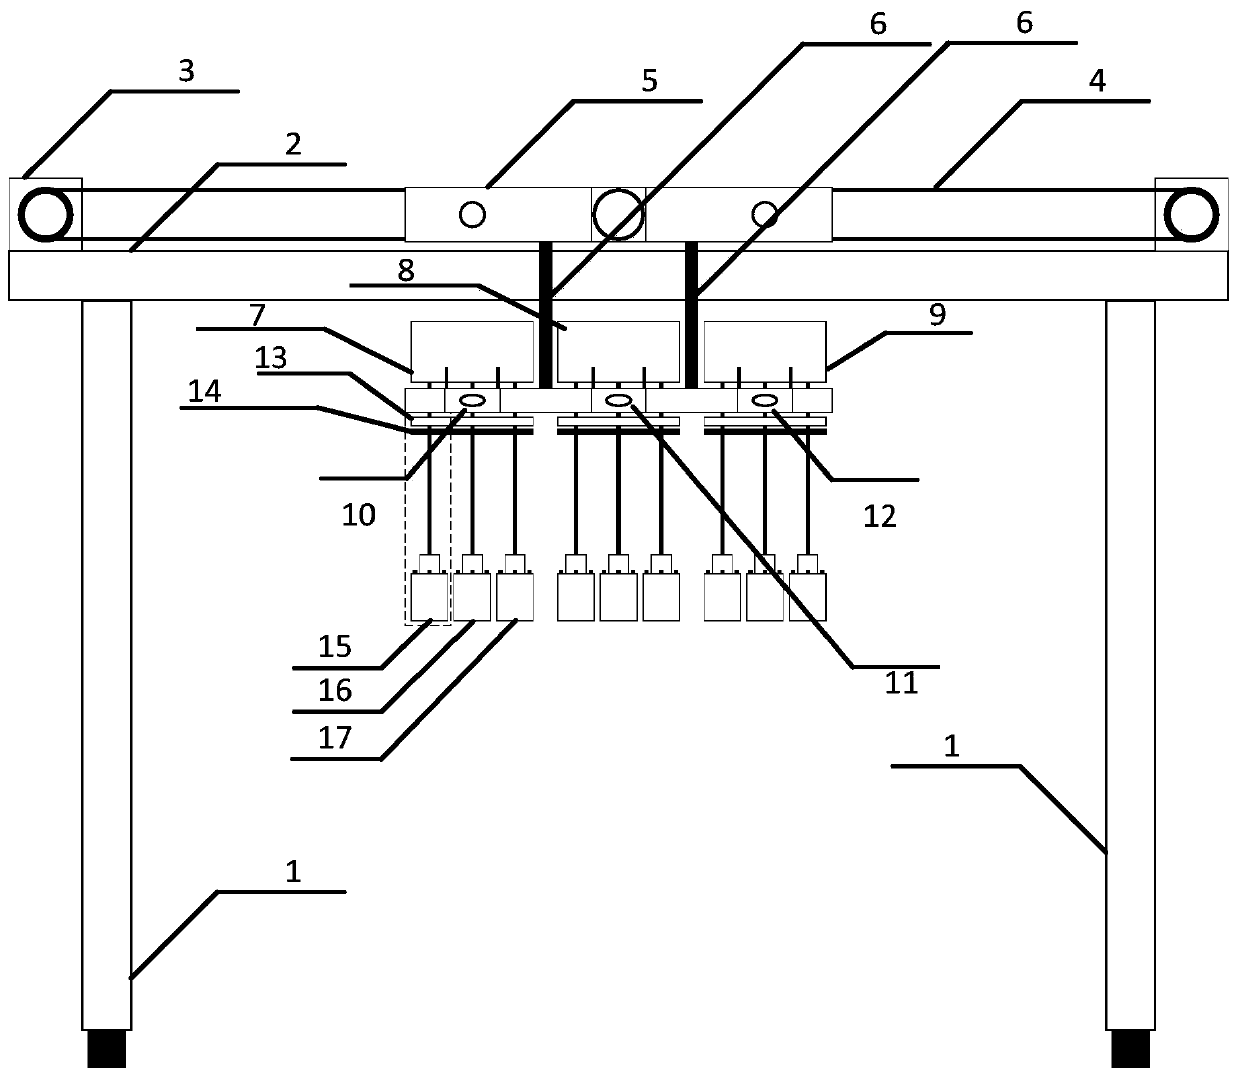 Multiple-swing angle detection device based on light sensing positioner for multi-lifting-appliance bridge crane